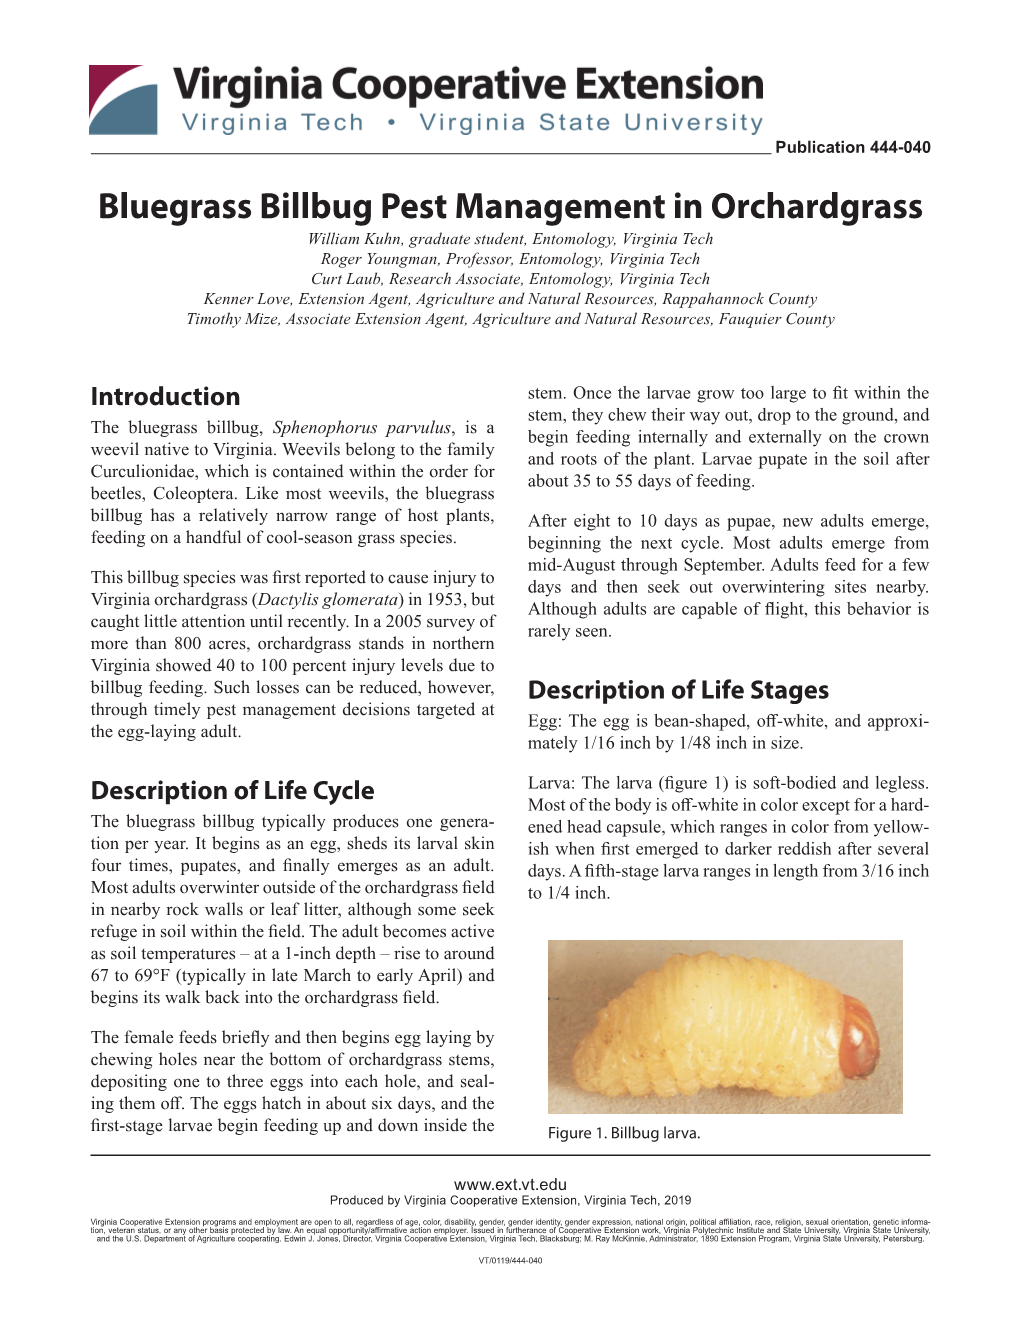 Bluegrass Billbug Pest Management in Orchardgrass